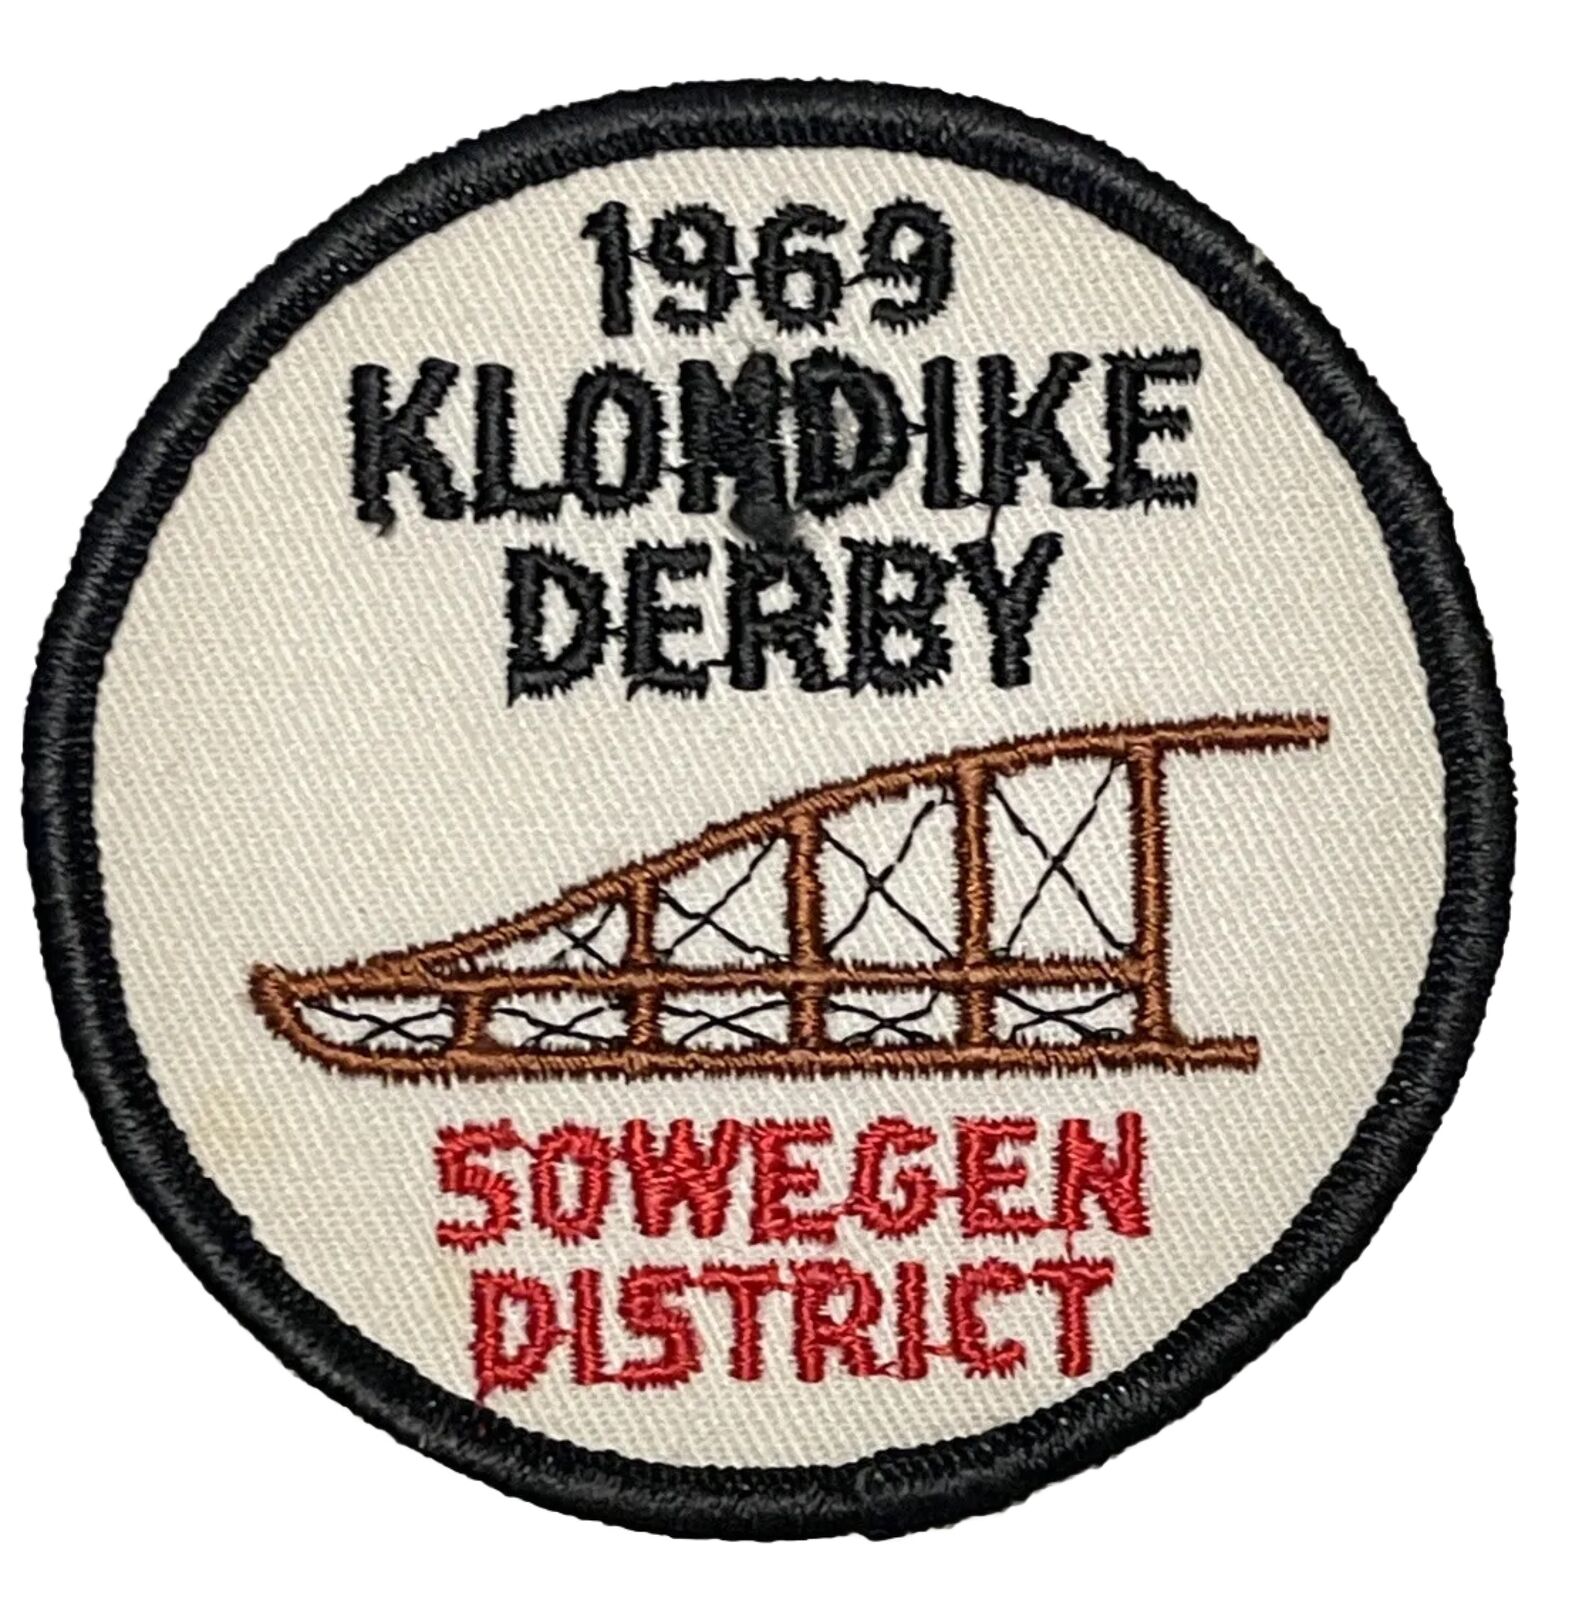 Sowegen District Patch 1969 Klondike Derby BSA Boy Scouts Vintage Badge Emblem